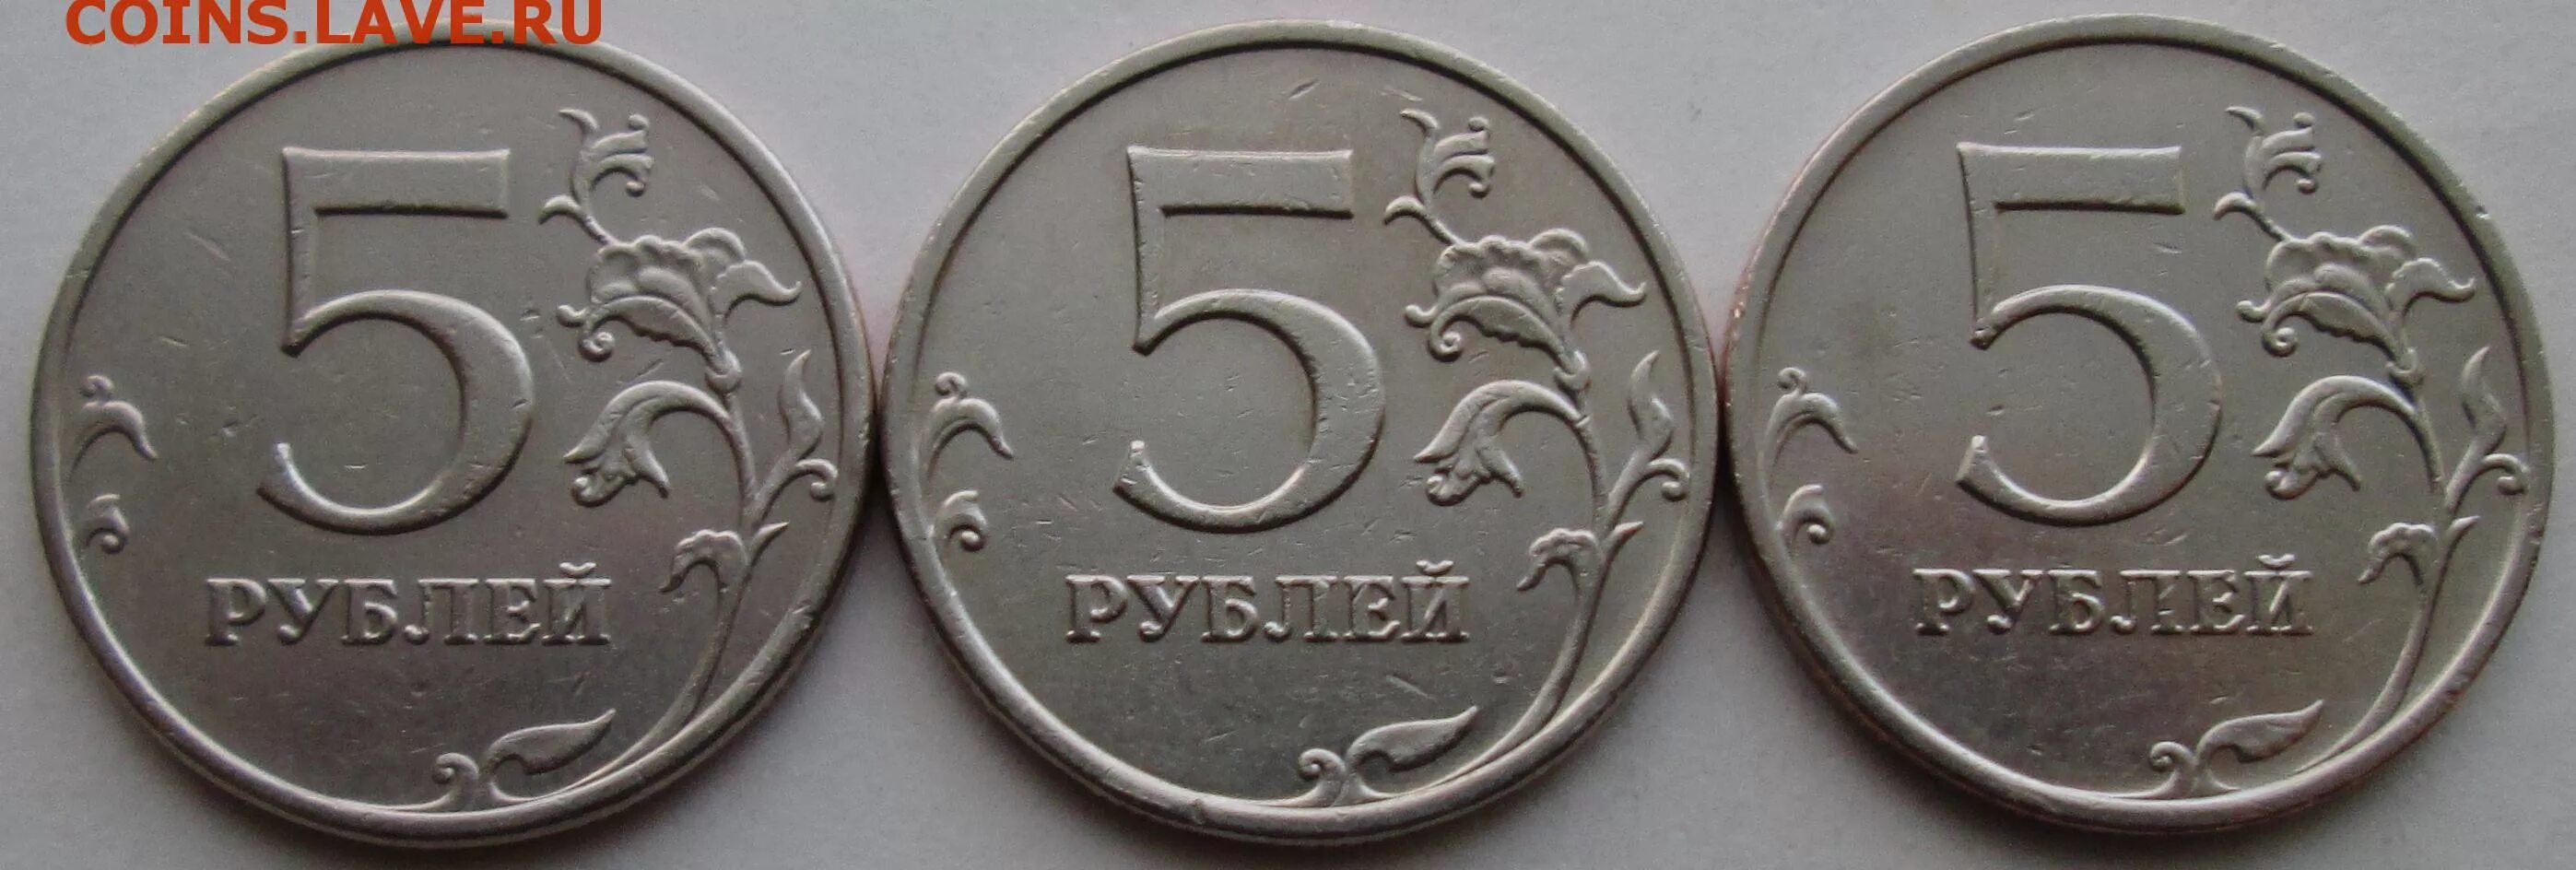 Рубль 5 26. 5 Рублей большие. 3 Шт 1. 5руб 2009г СПМД магнитная цена на аукционе. Ас24-5-1.